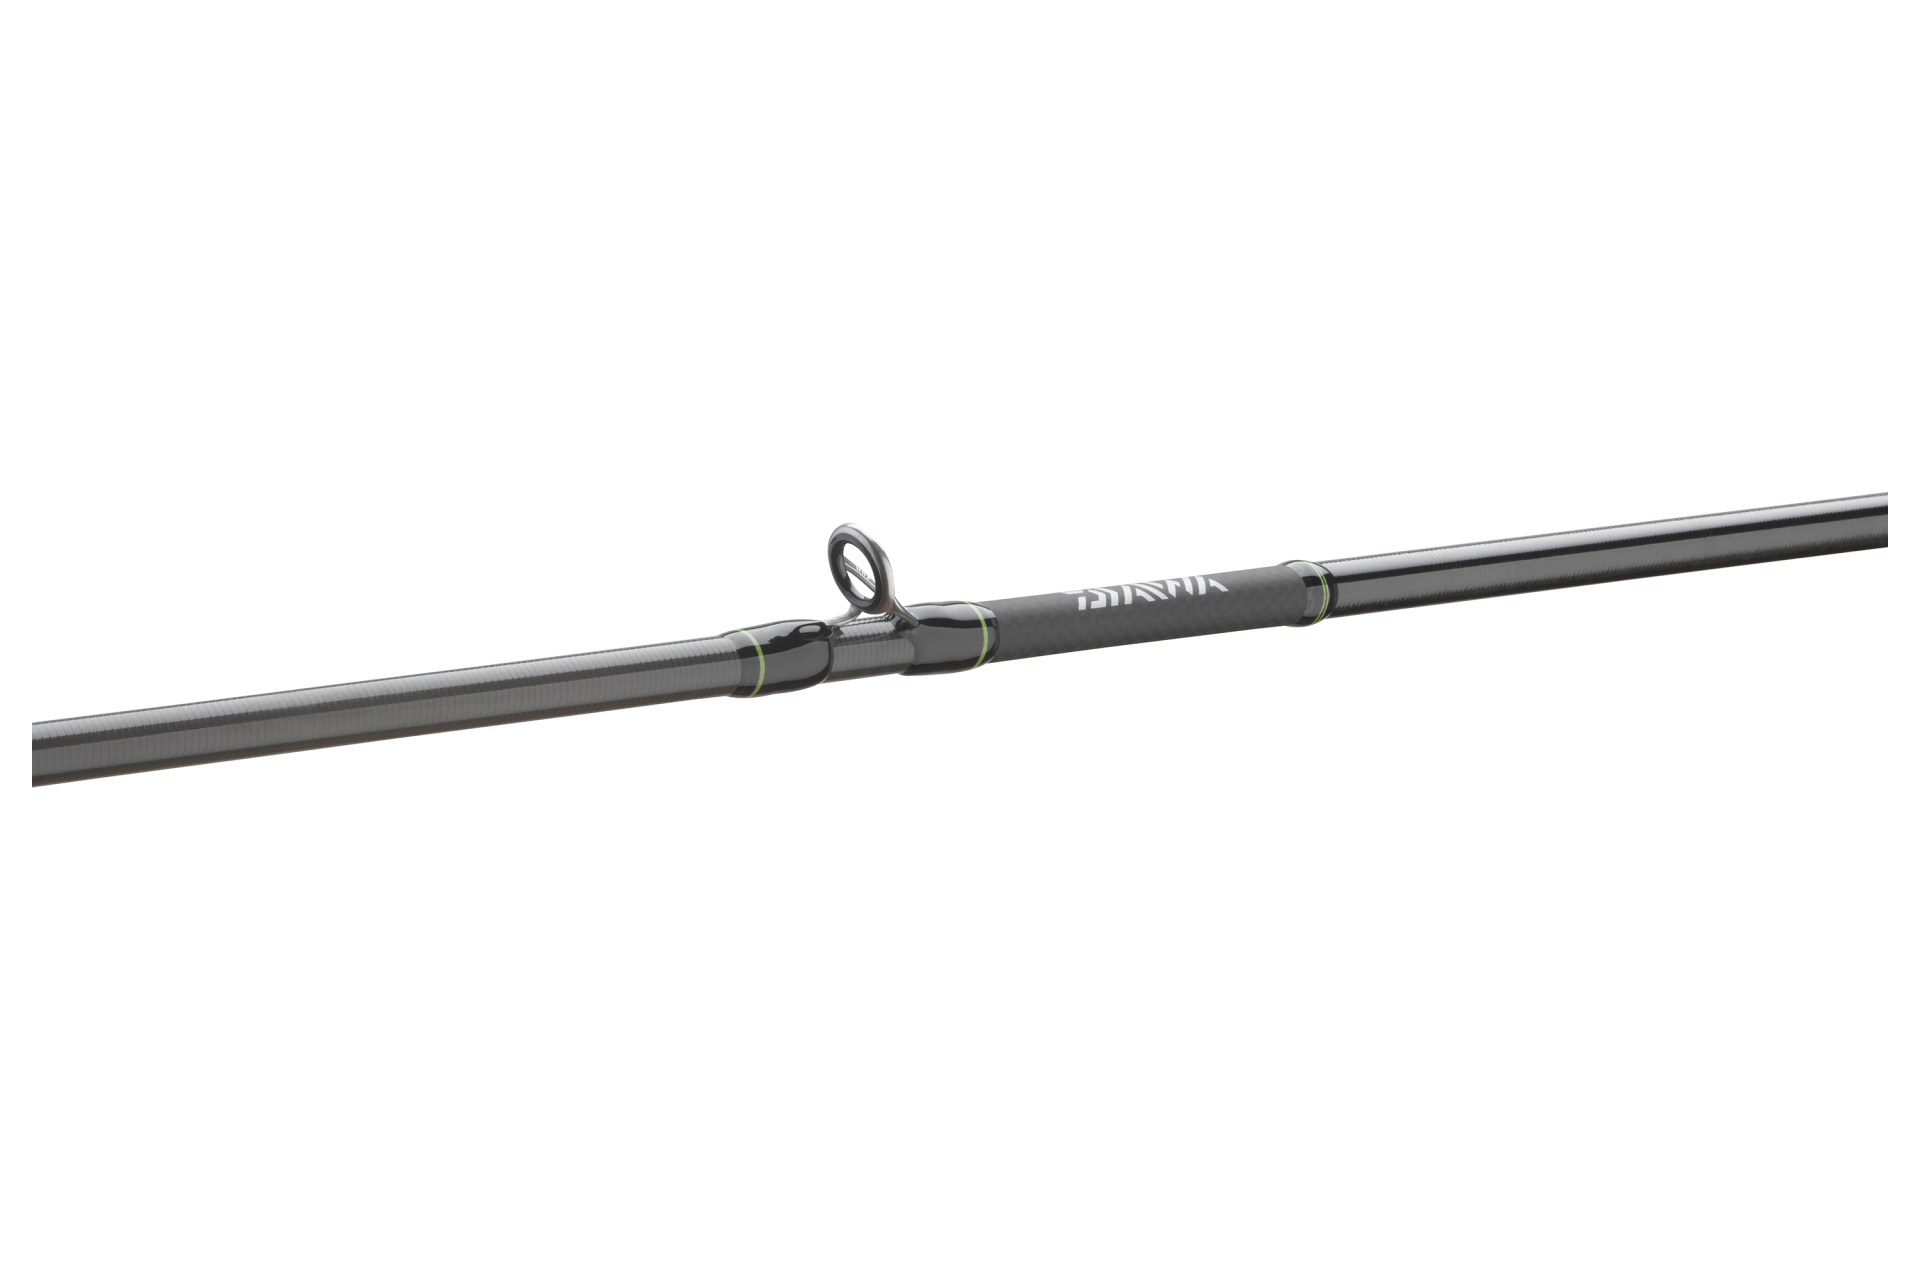 Prorex XR Finesse Caster <span>| Baitcasting rod | L | Tubular tip</span>